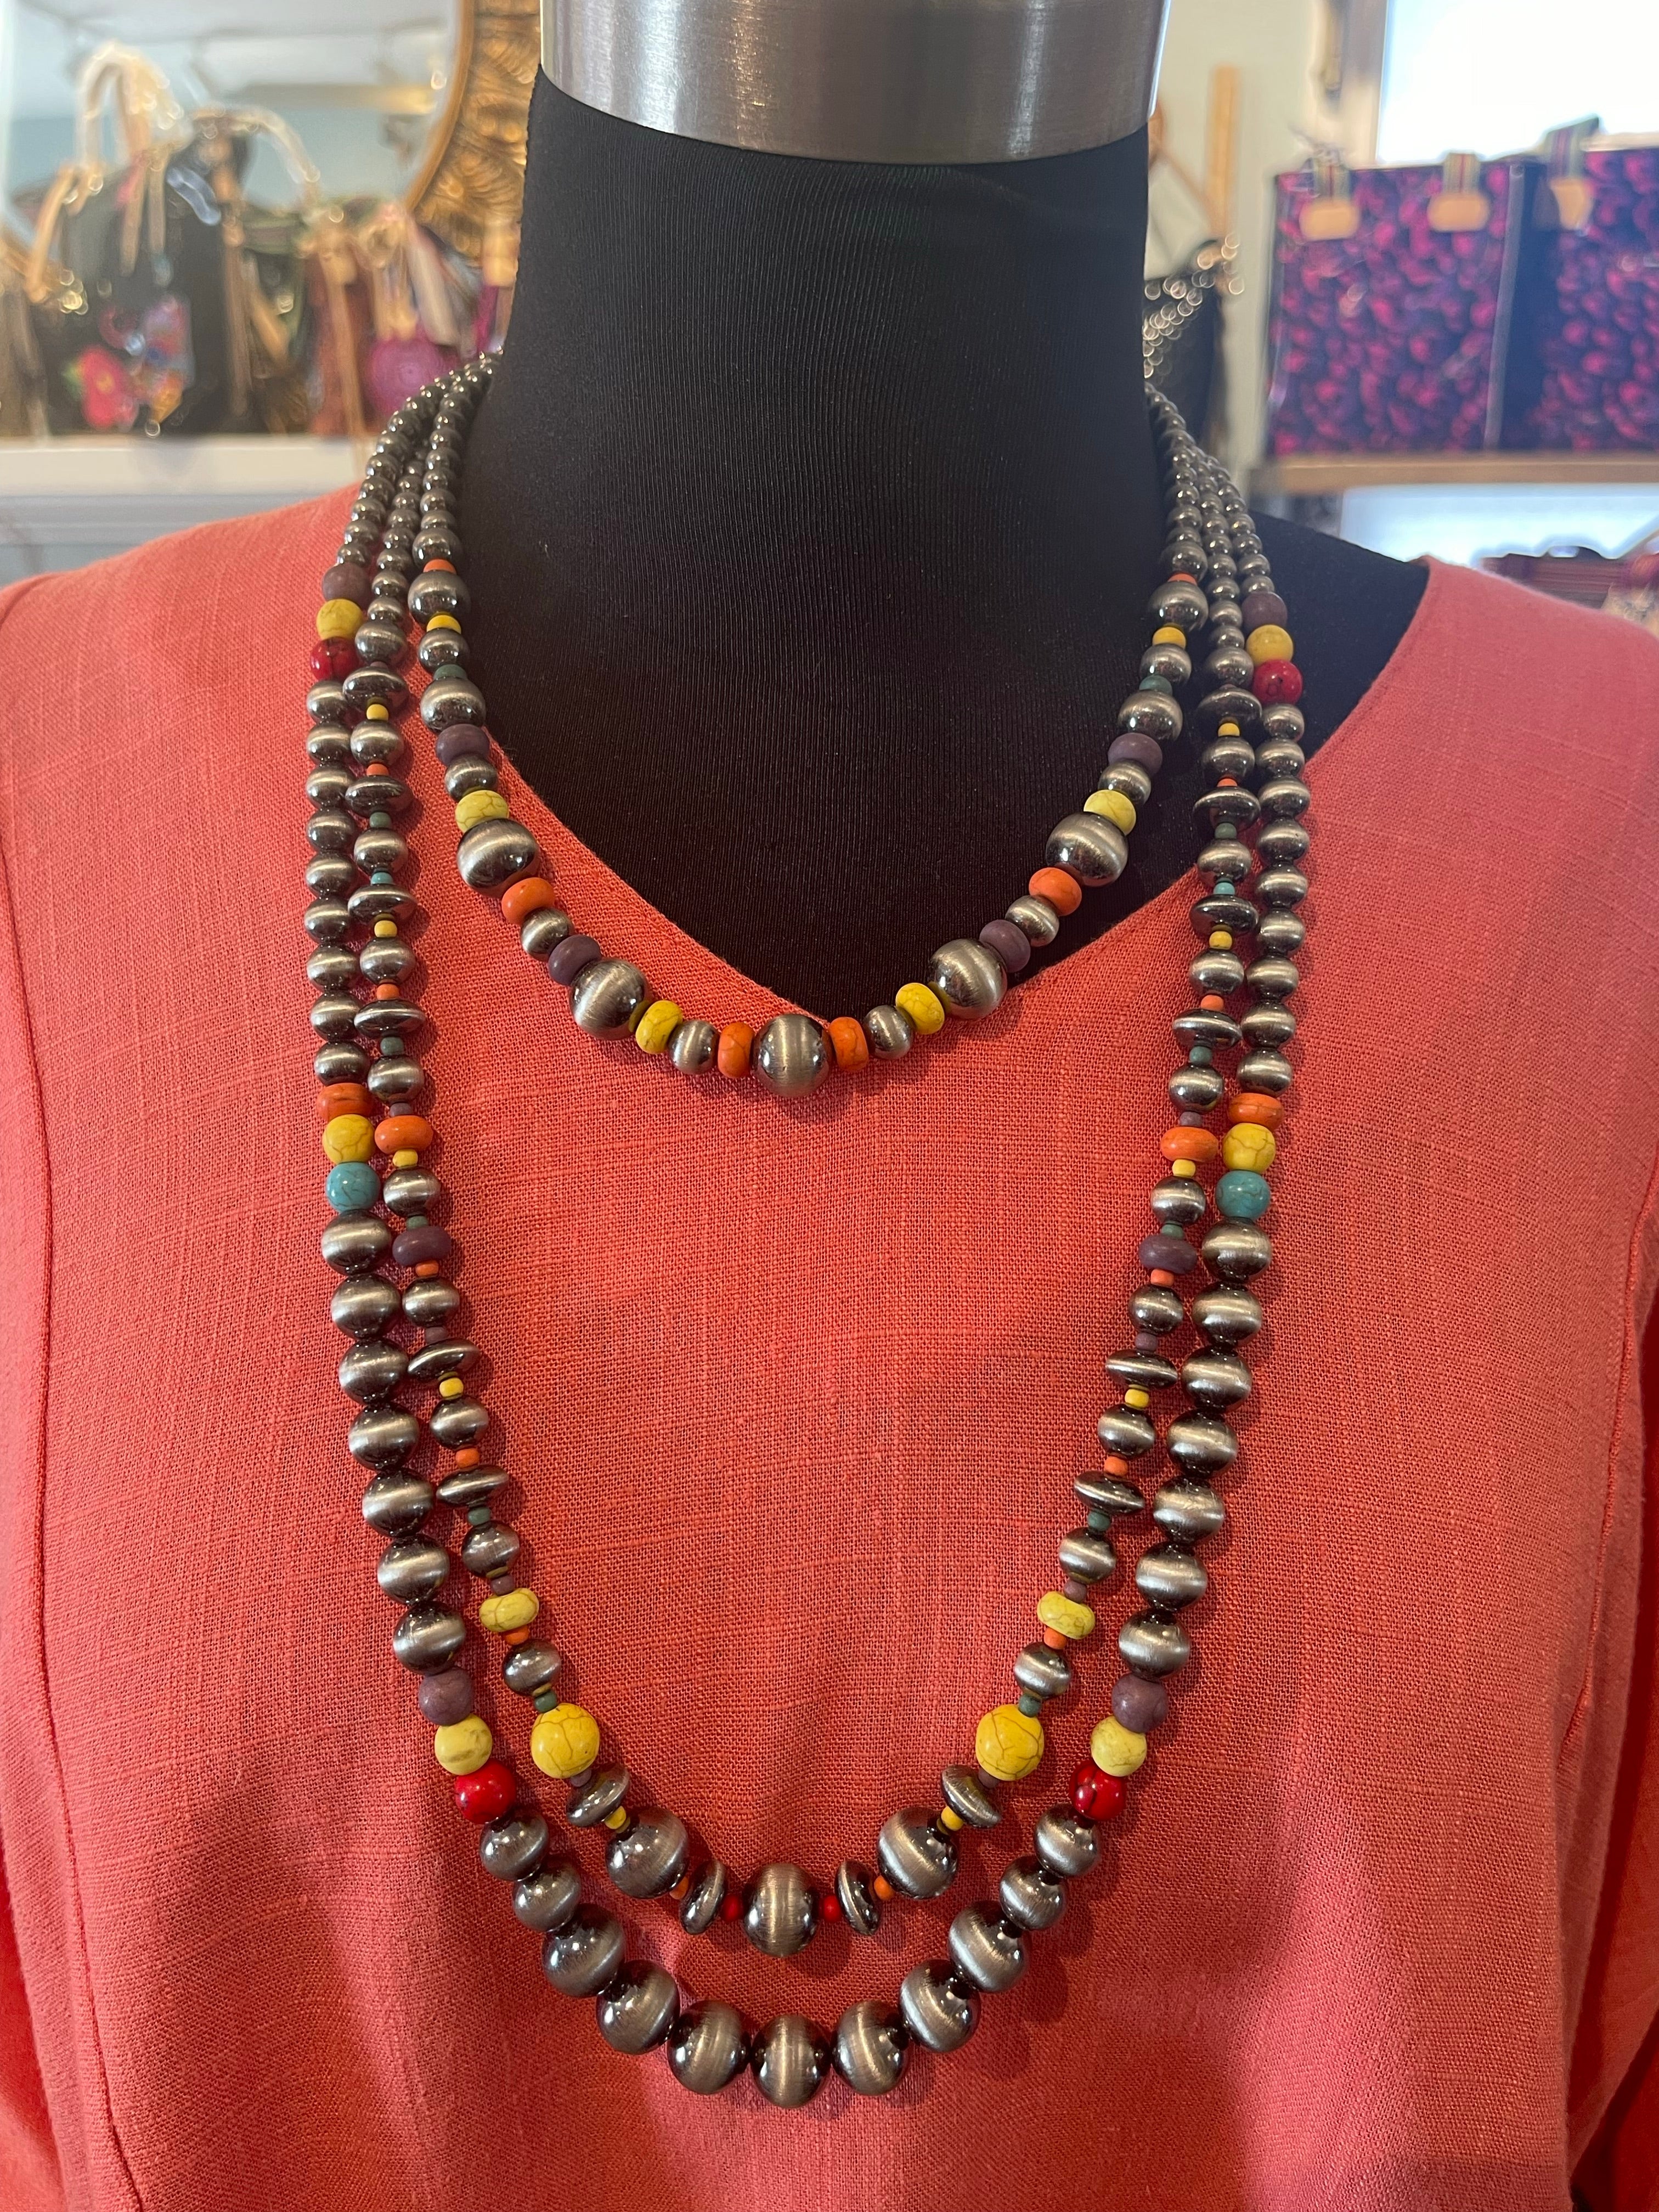 3 Strand Navajo Pearl Fashion Necklace w/ Earrings